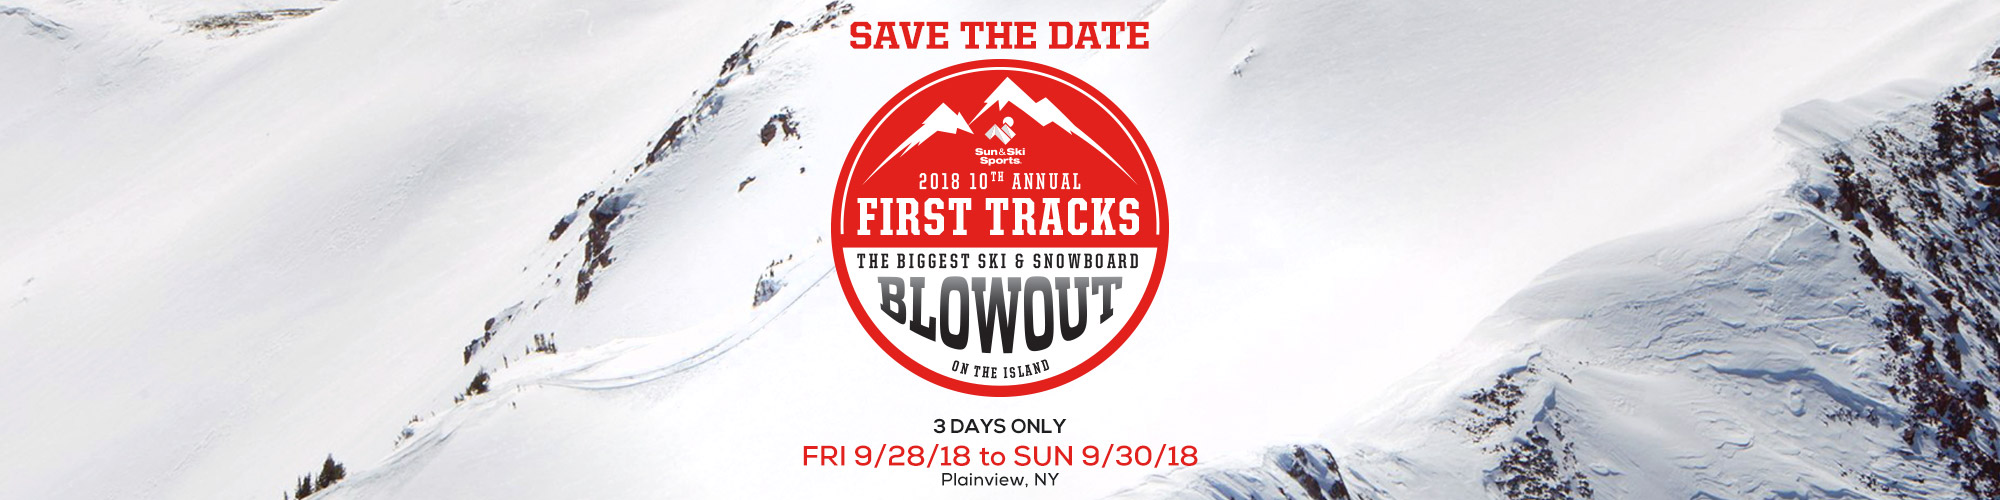 First Tracks Ski & Snowboard Blowout - Plainview, NY